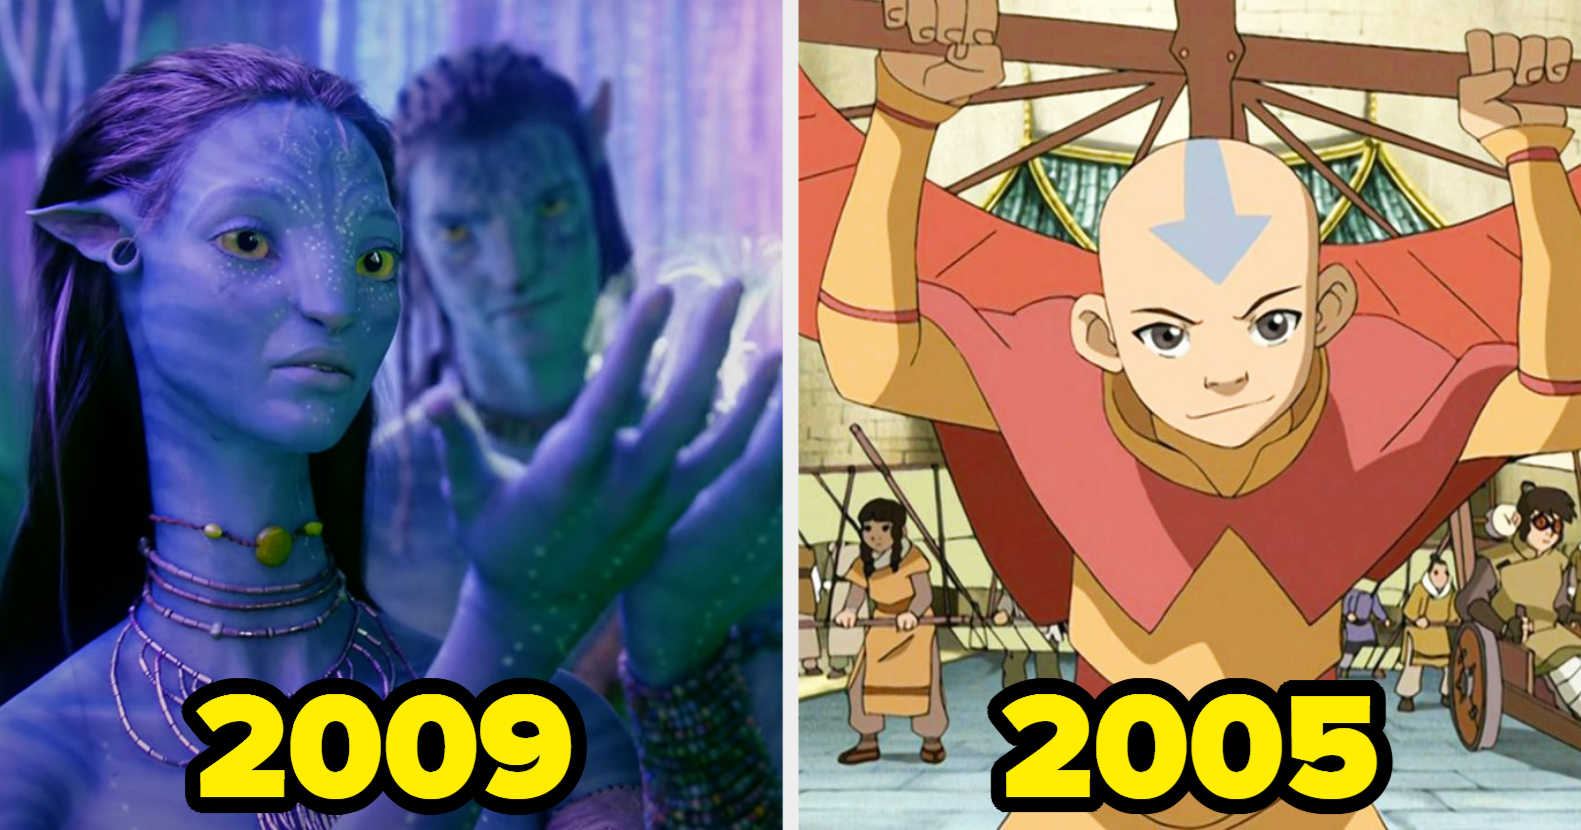 Avatar 10 Ways The Original Movies Special Effects Were Groundbreaking